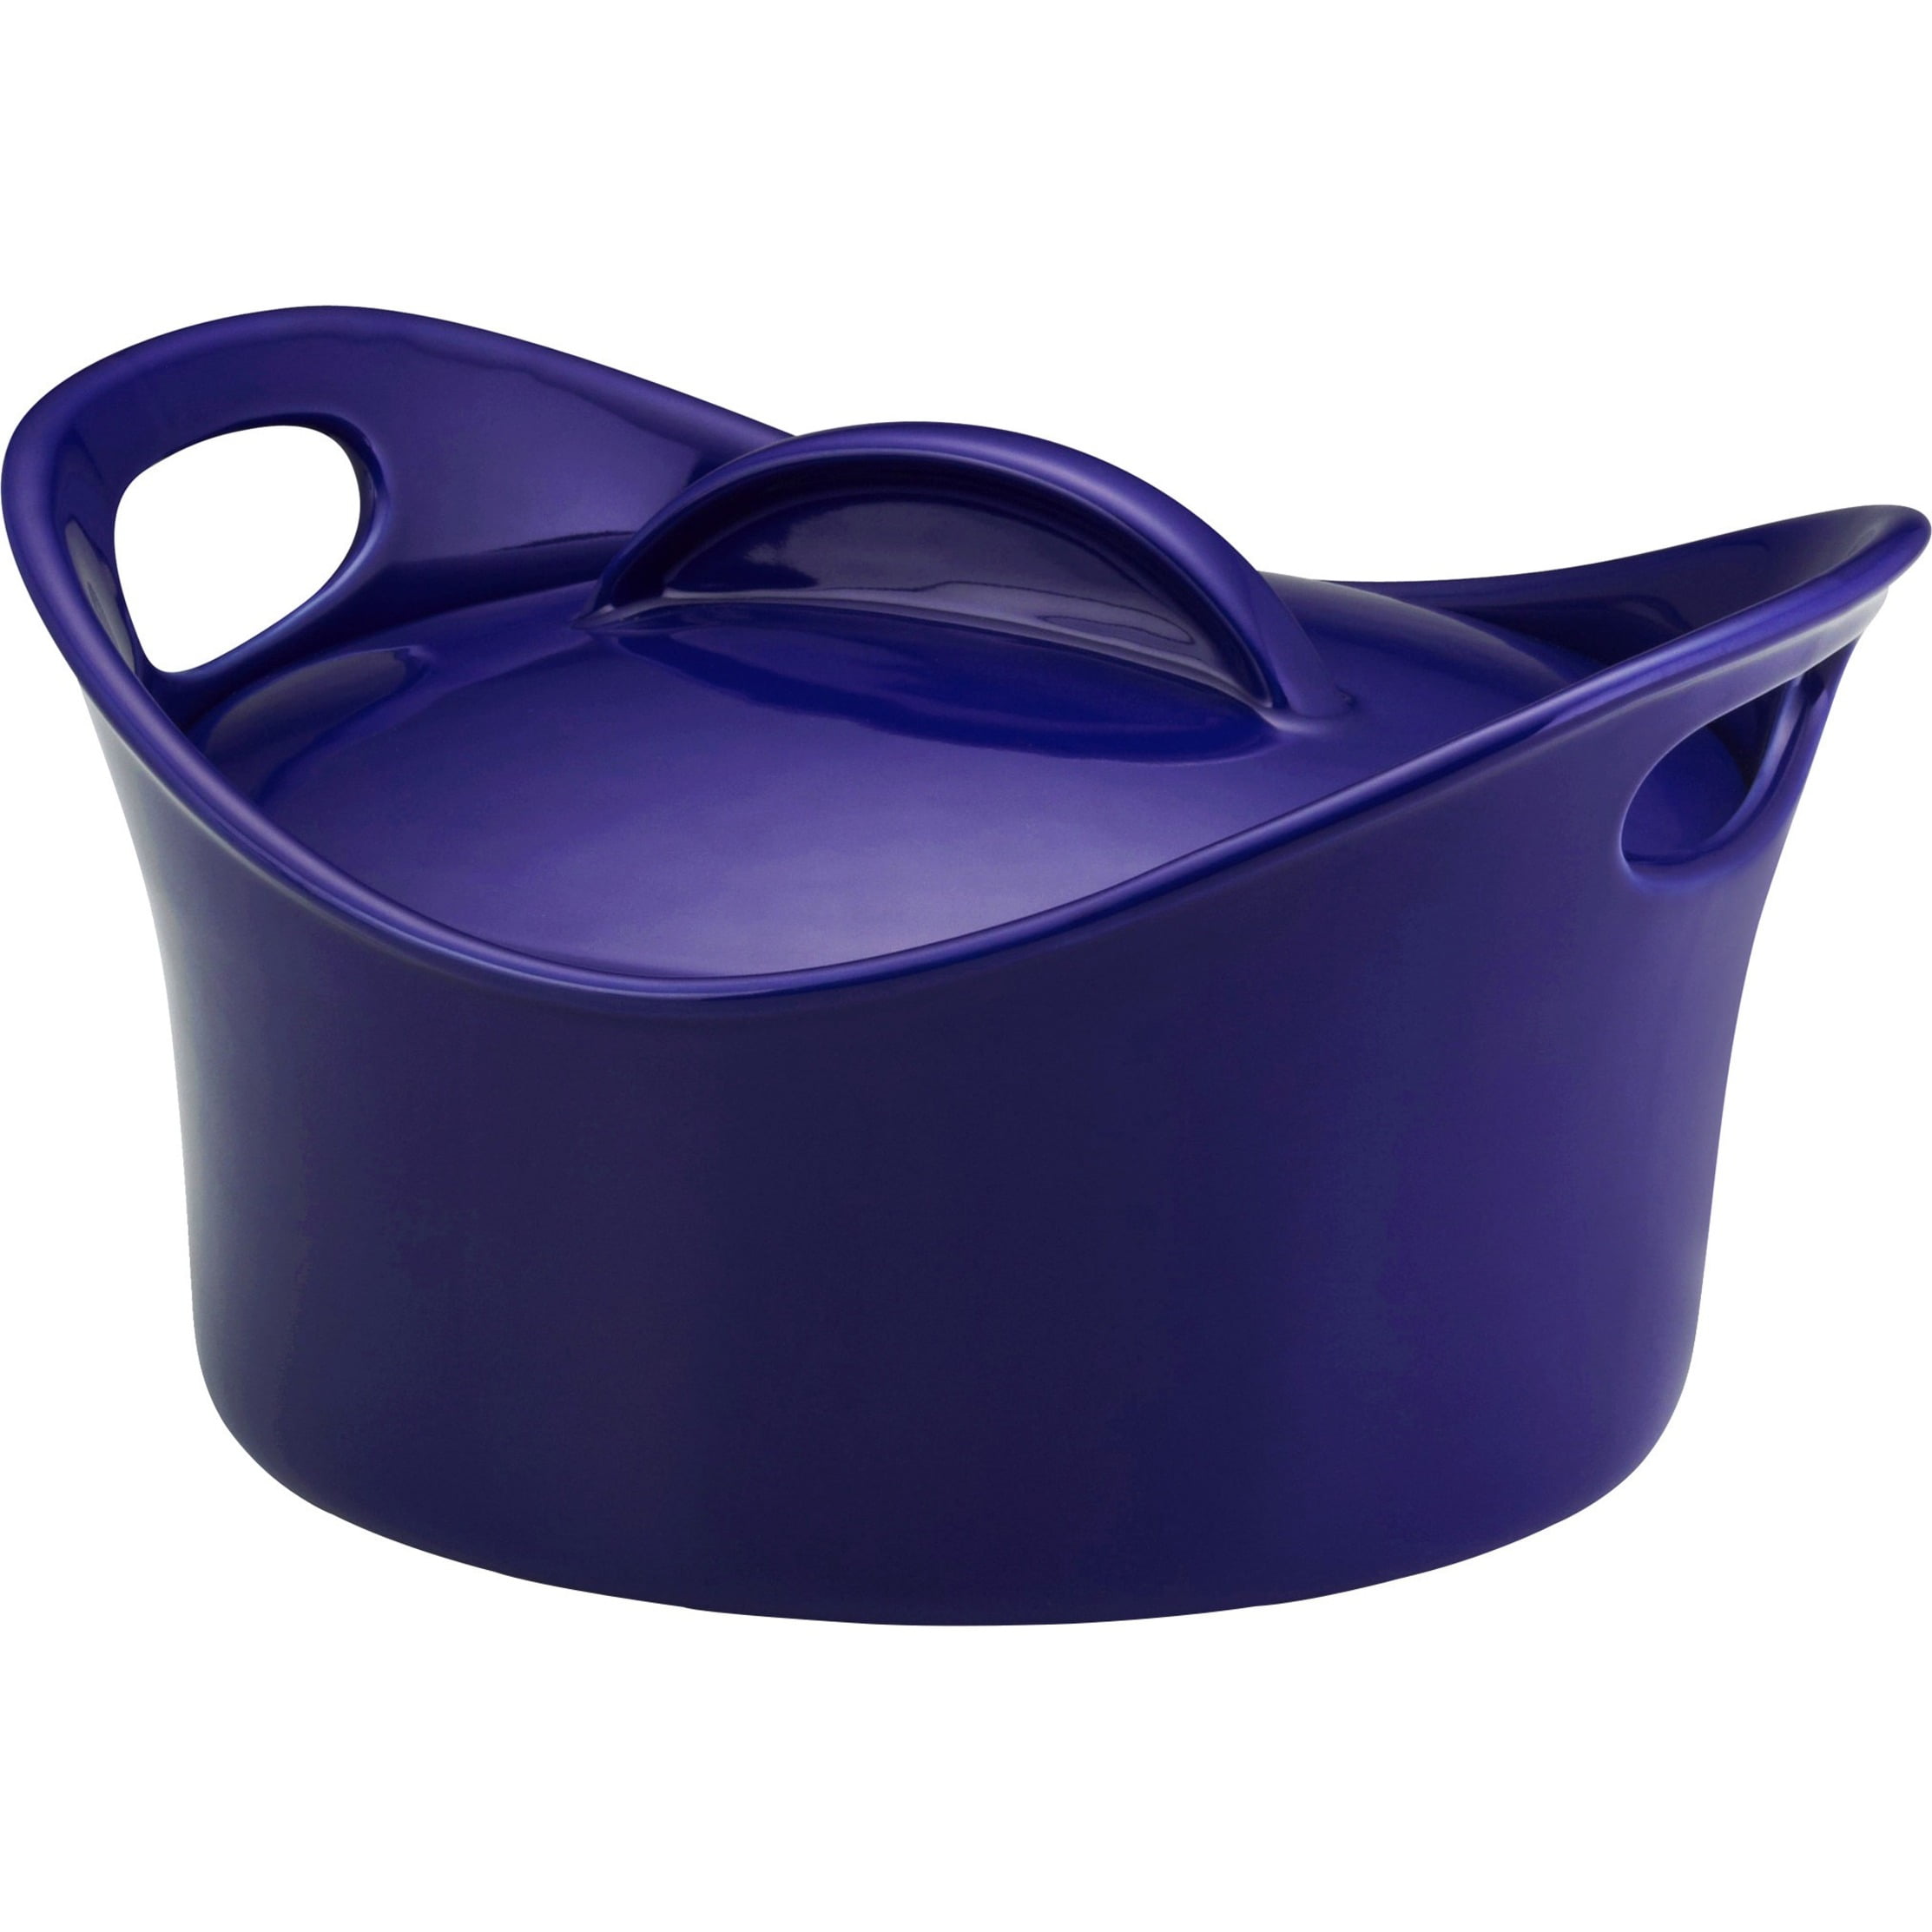 Rachael Ray Stoneware 3.5-Quart Rectangular Covered Casserole & Baking Dish Purple